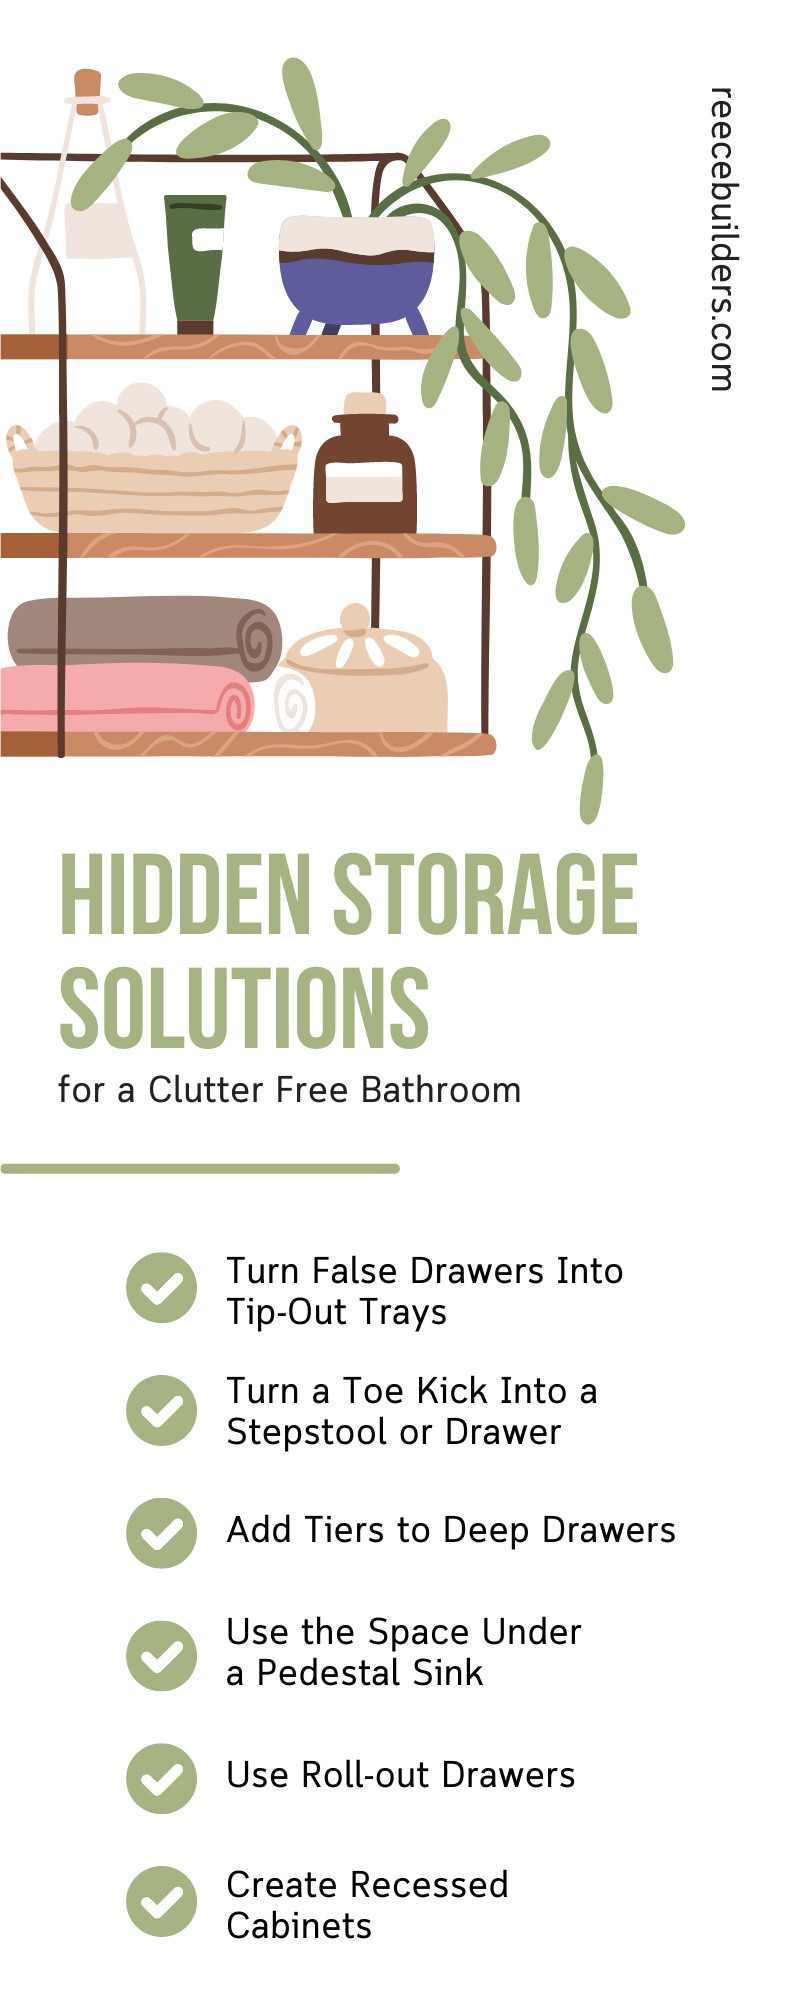 Ten Hidden Storage Solutions for a Clutter Free Bathroom